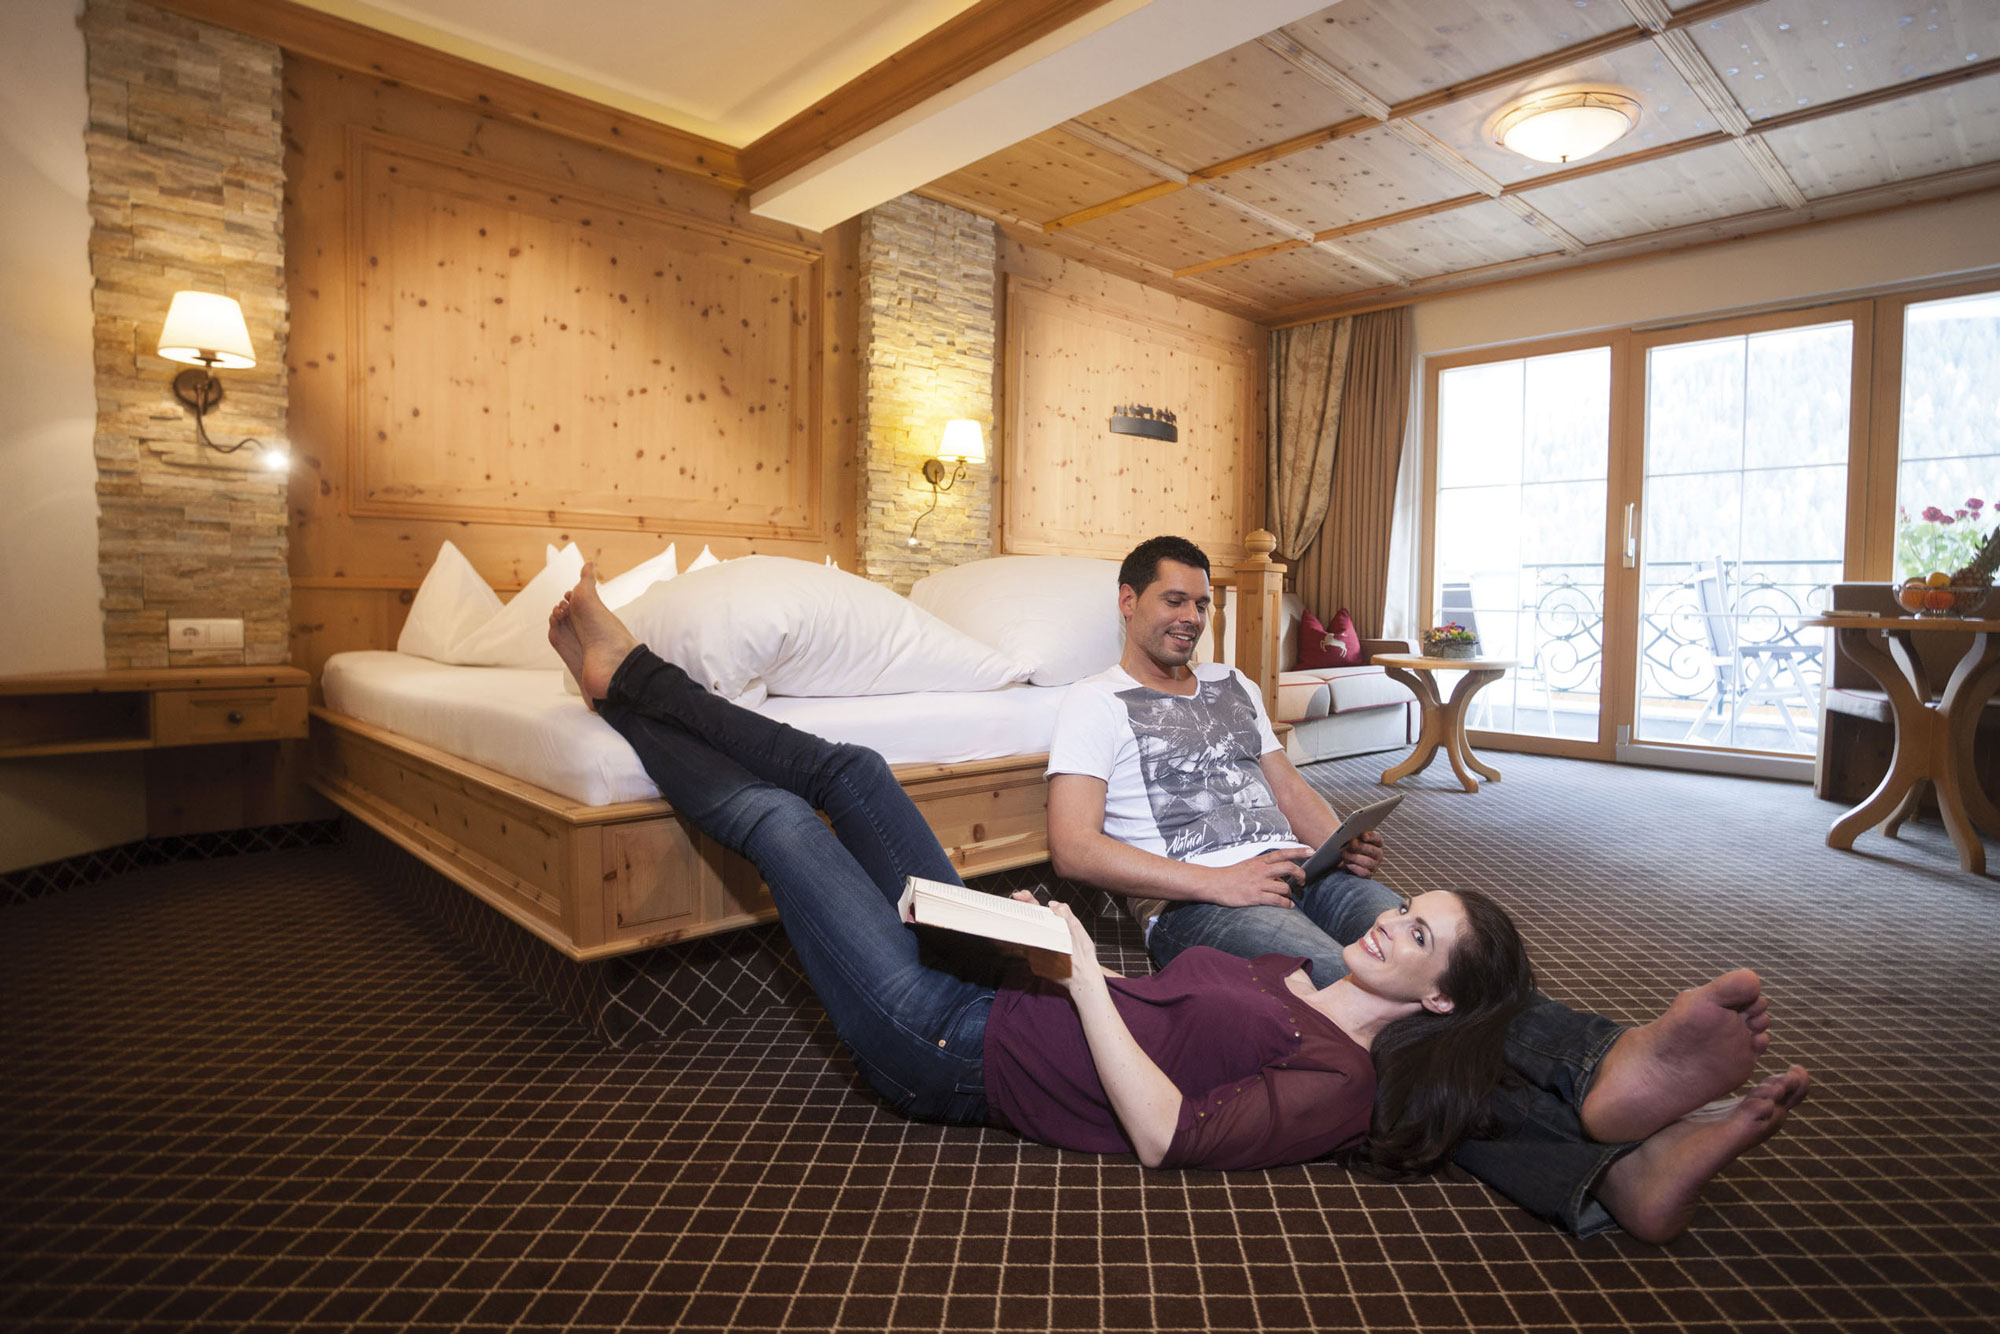 Odpočinková dovolená v hotelu Kindl v údolí Stubaital